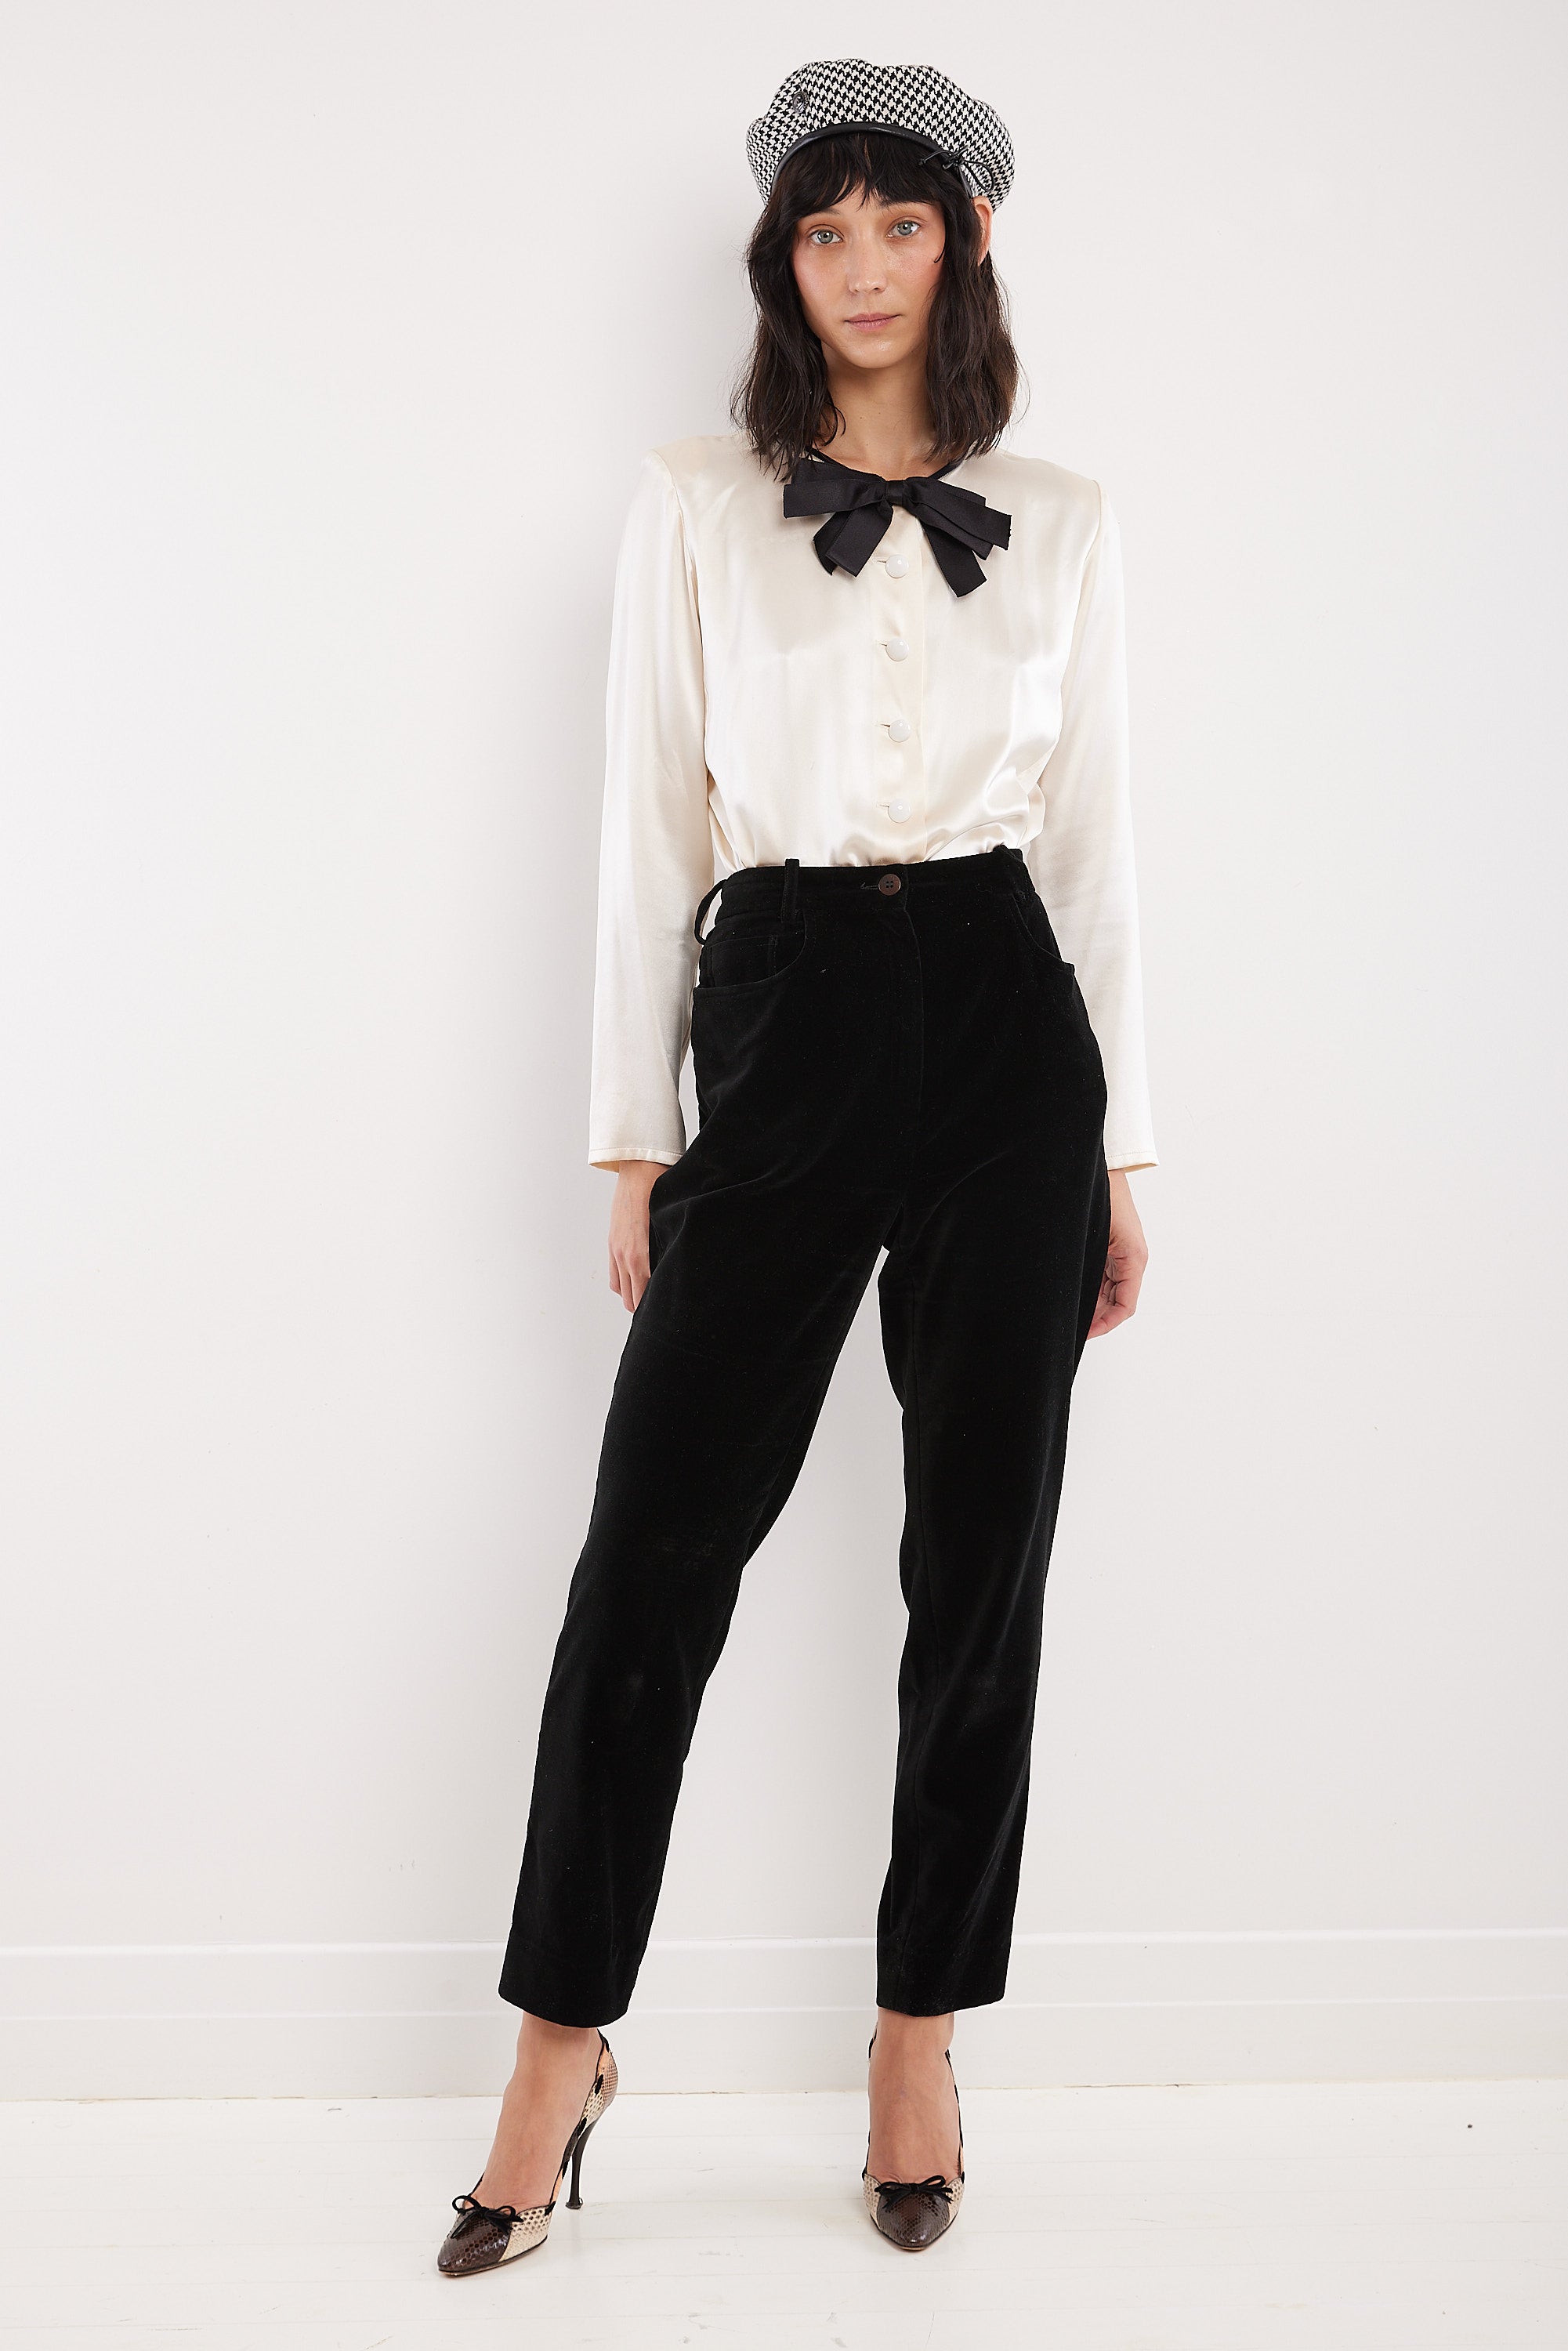 Yves Saint Laurent <br> 80's Rive Gauche cream silk blouse with ribbon bow